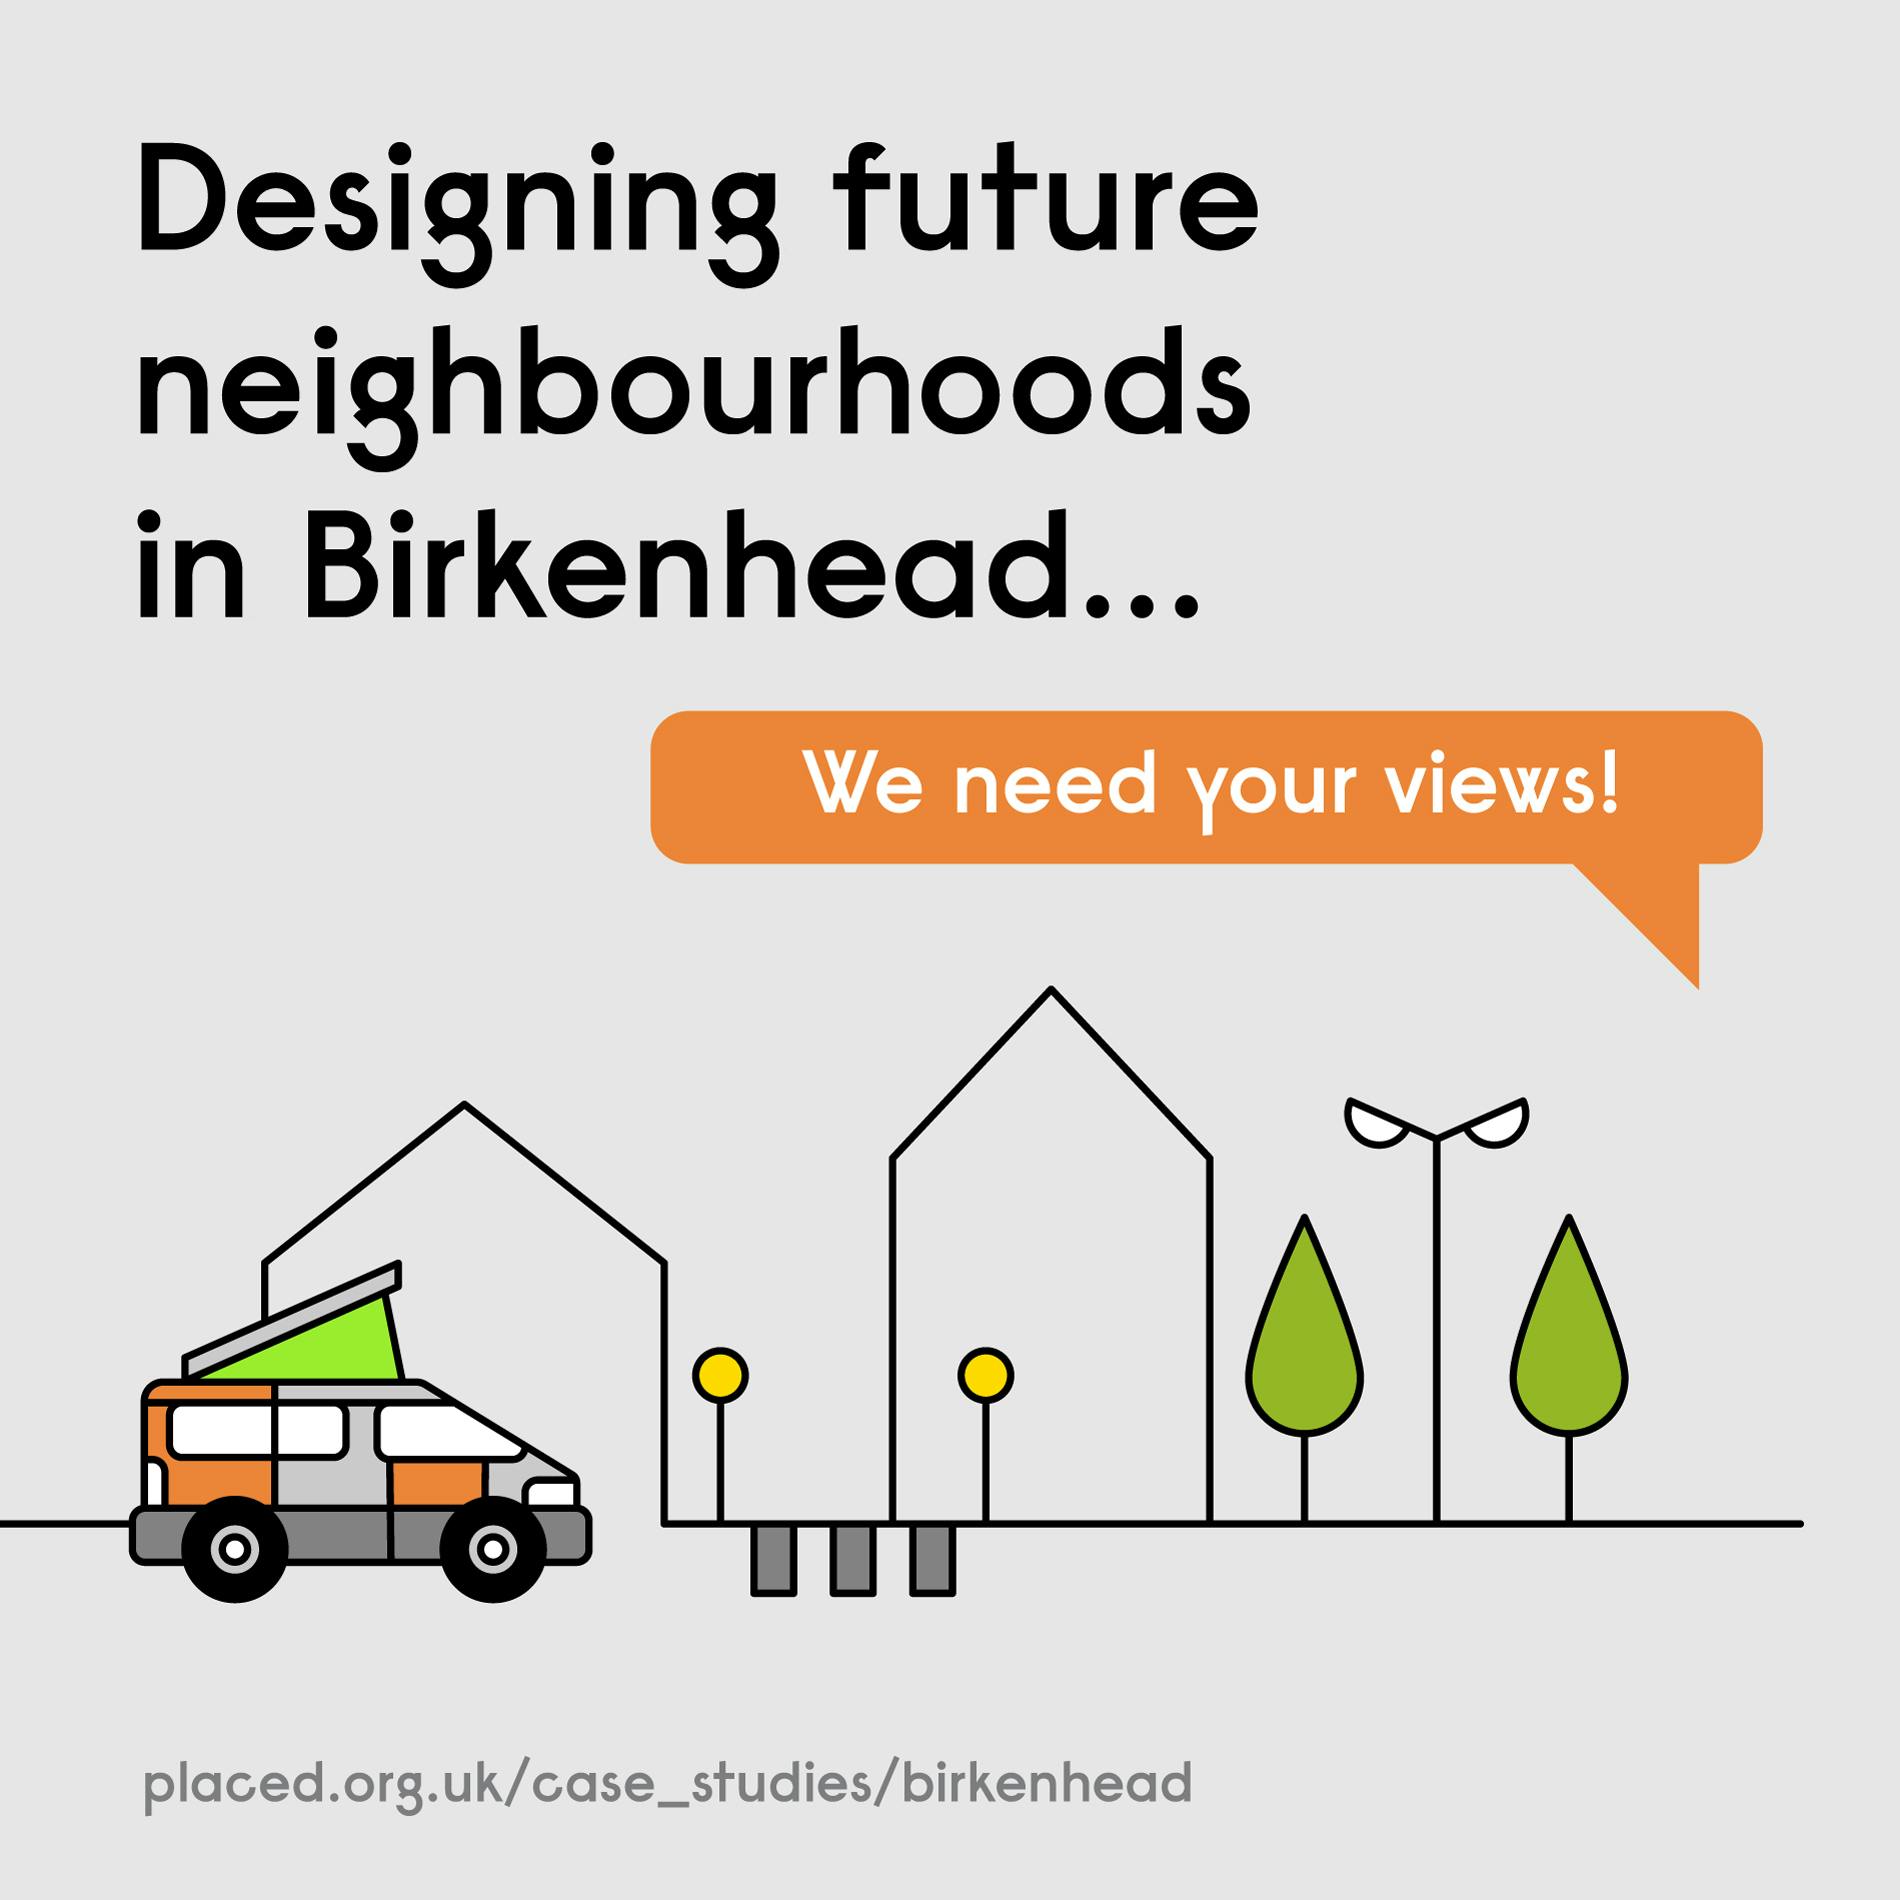 Designing future neighbourhoods in Birkenhead text and image